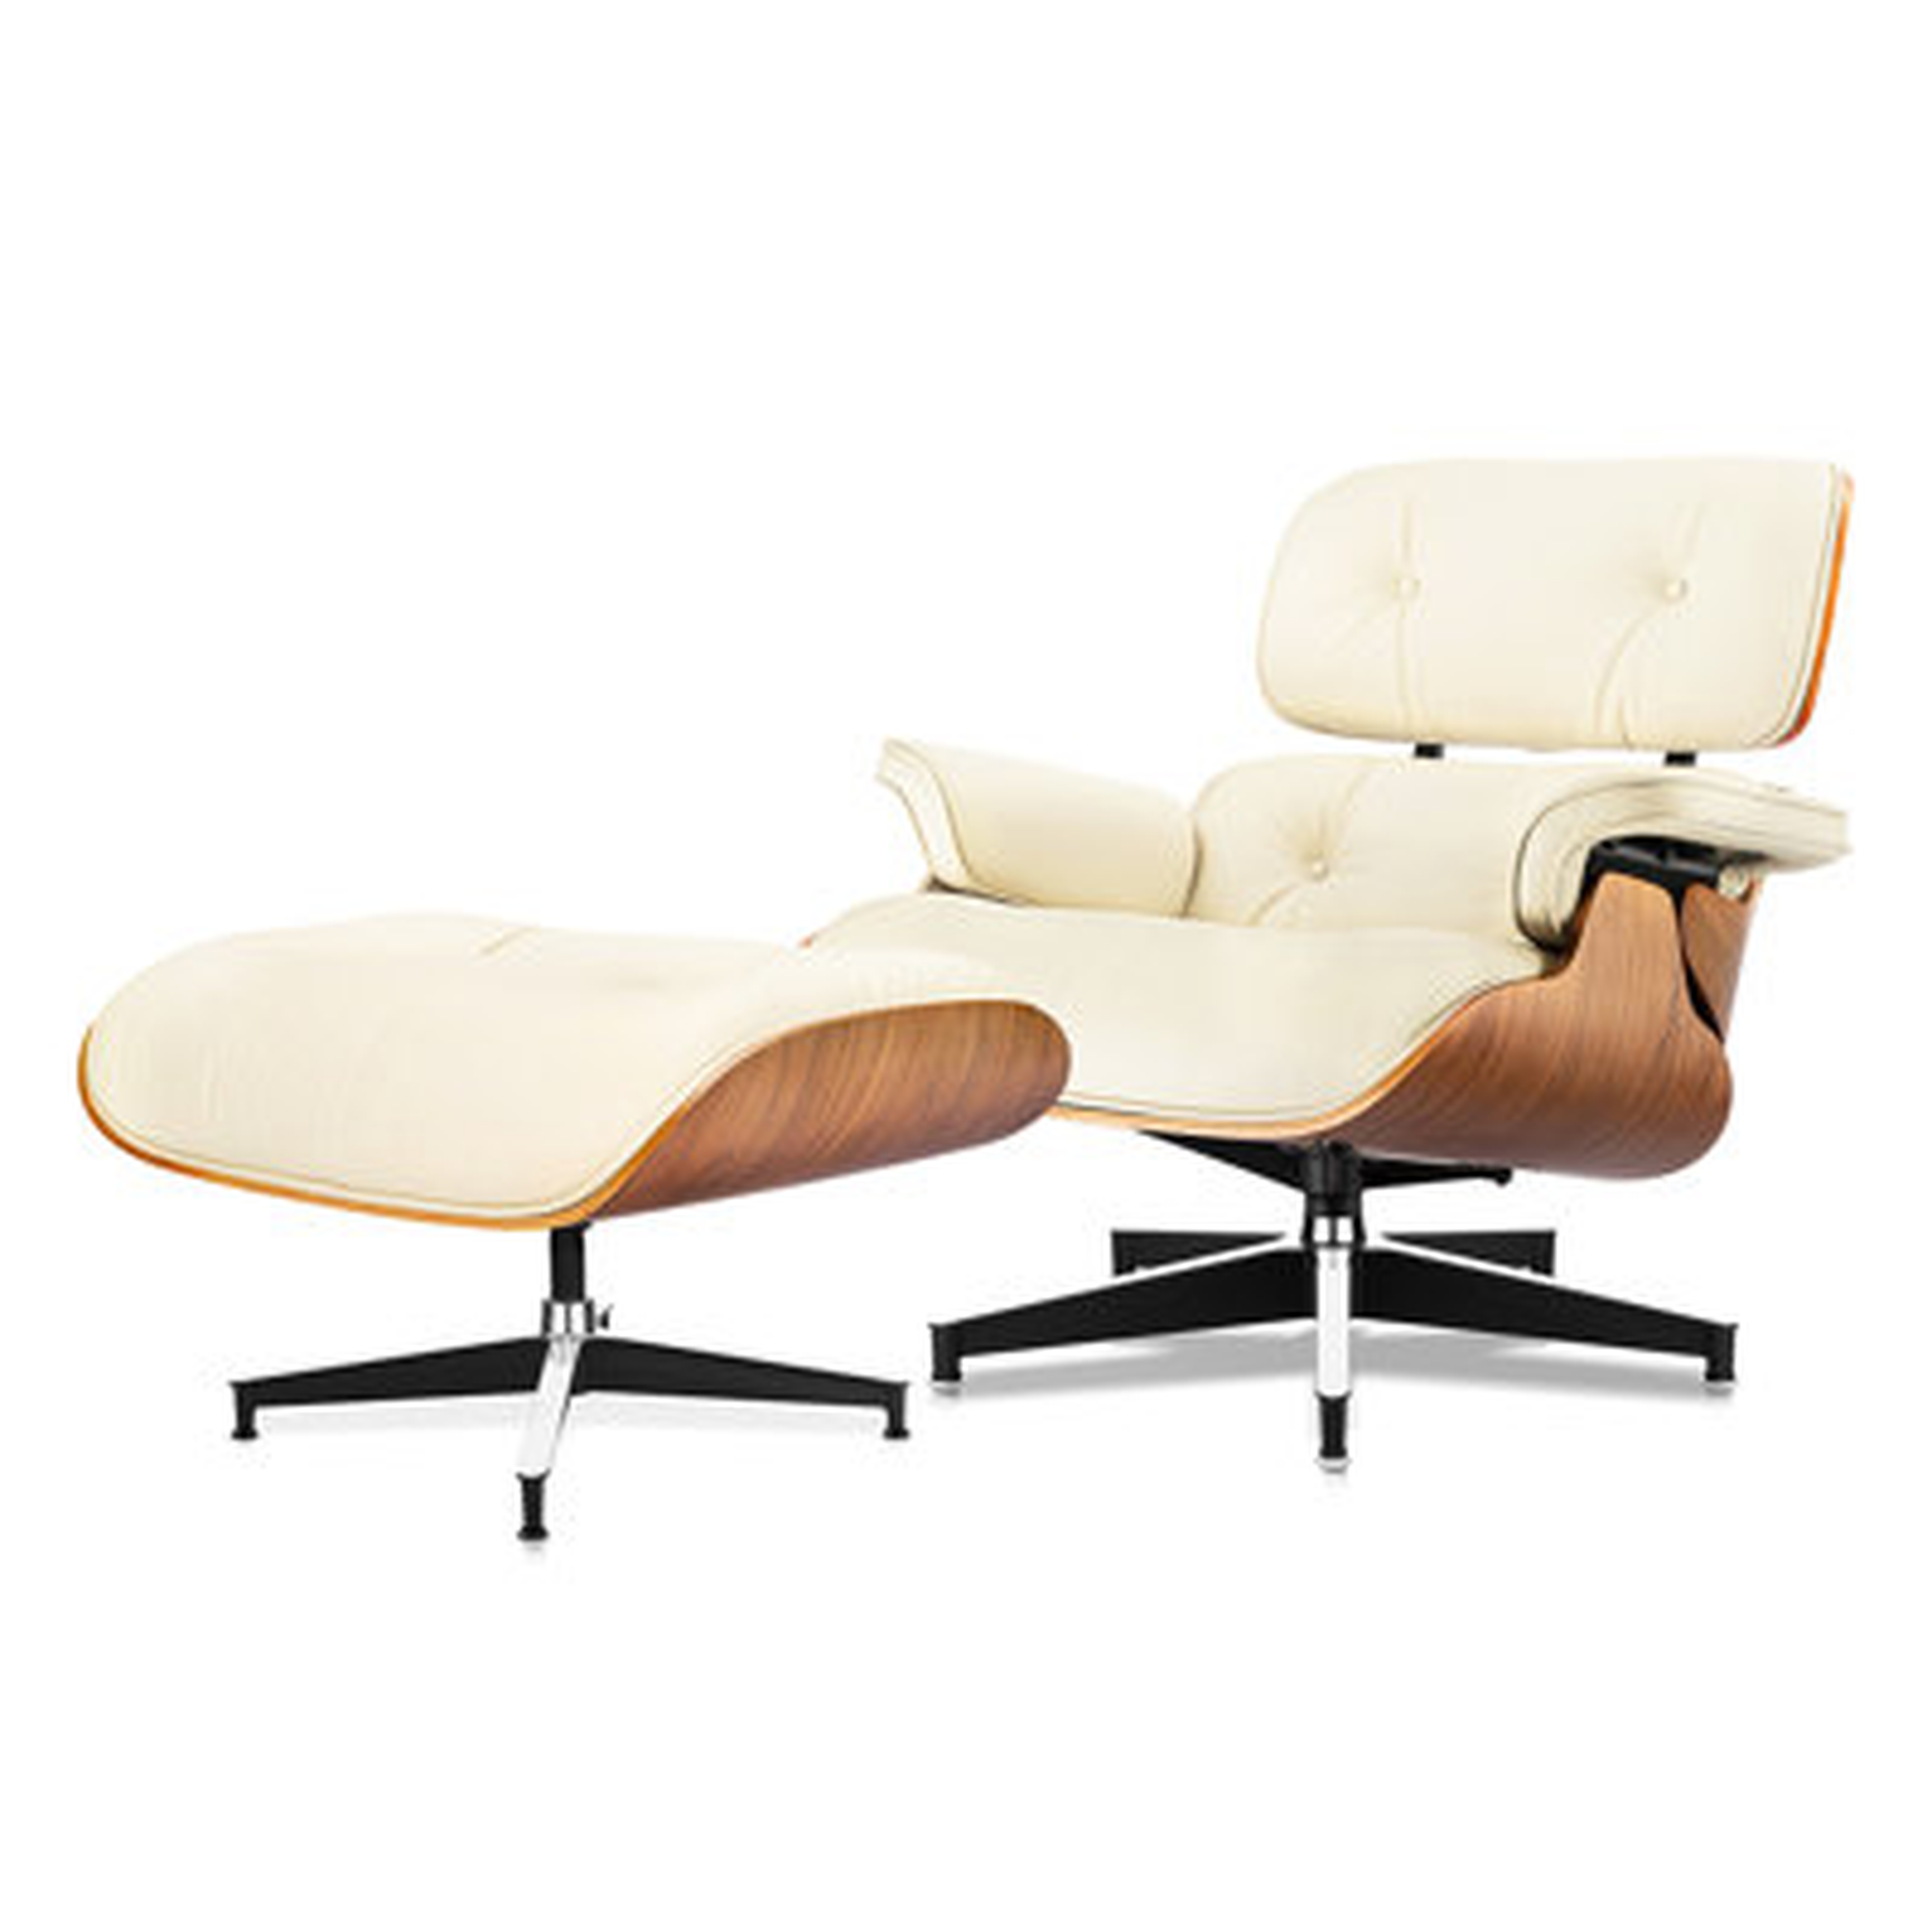 100% Full Grain Aniline Leather Premium Mid Century Lounge Chair And Ottoman Replica - Wayfair